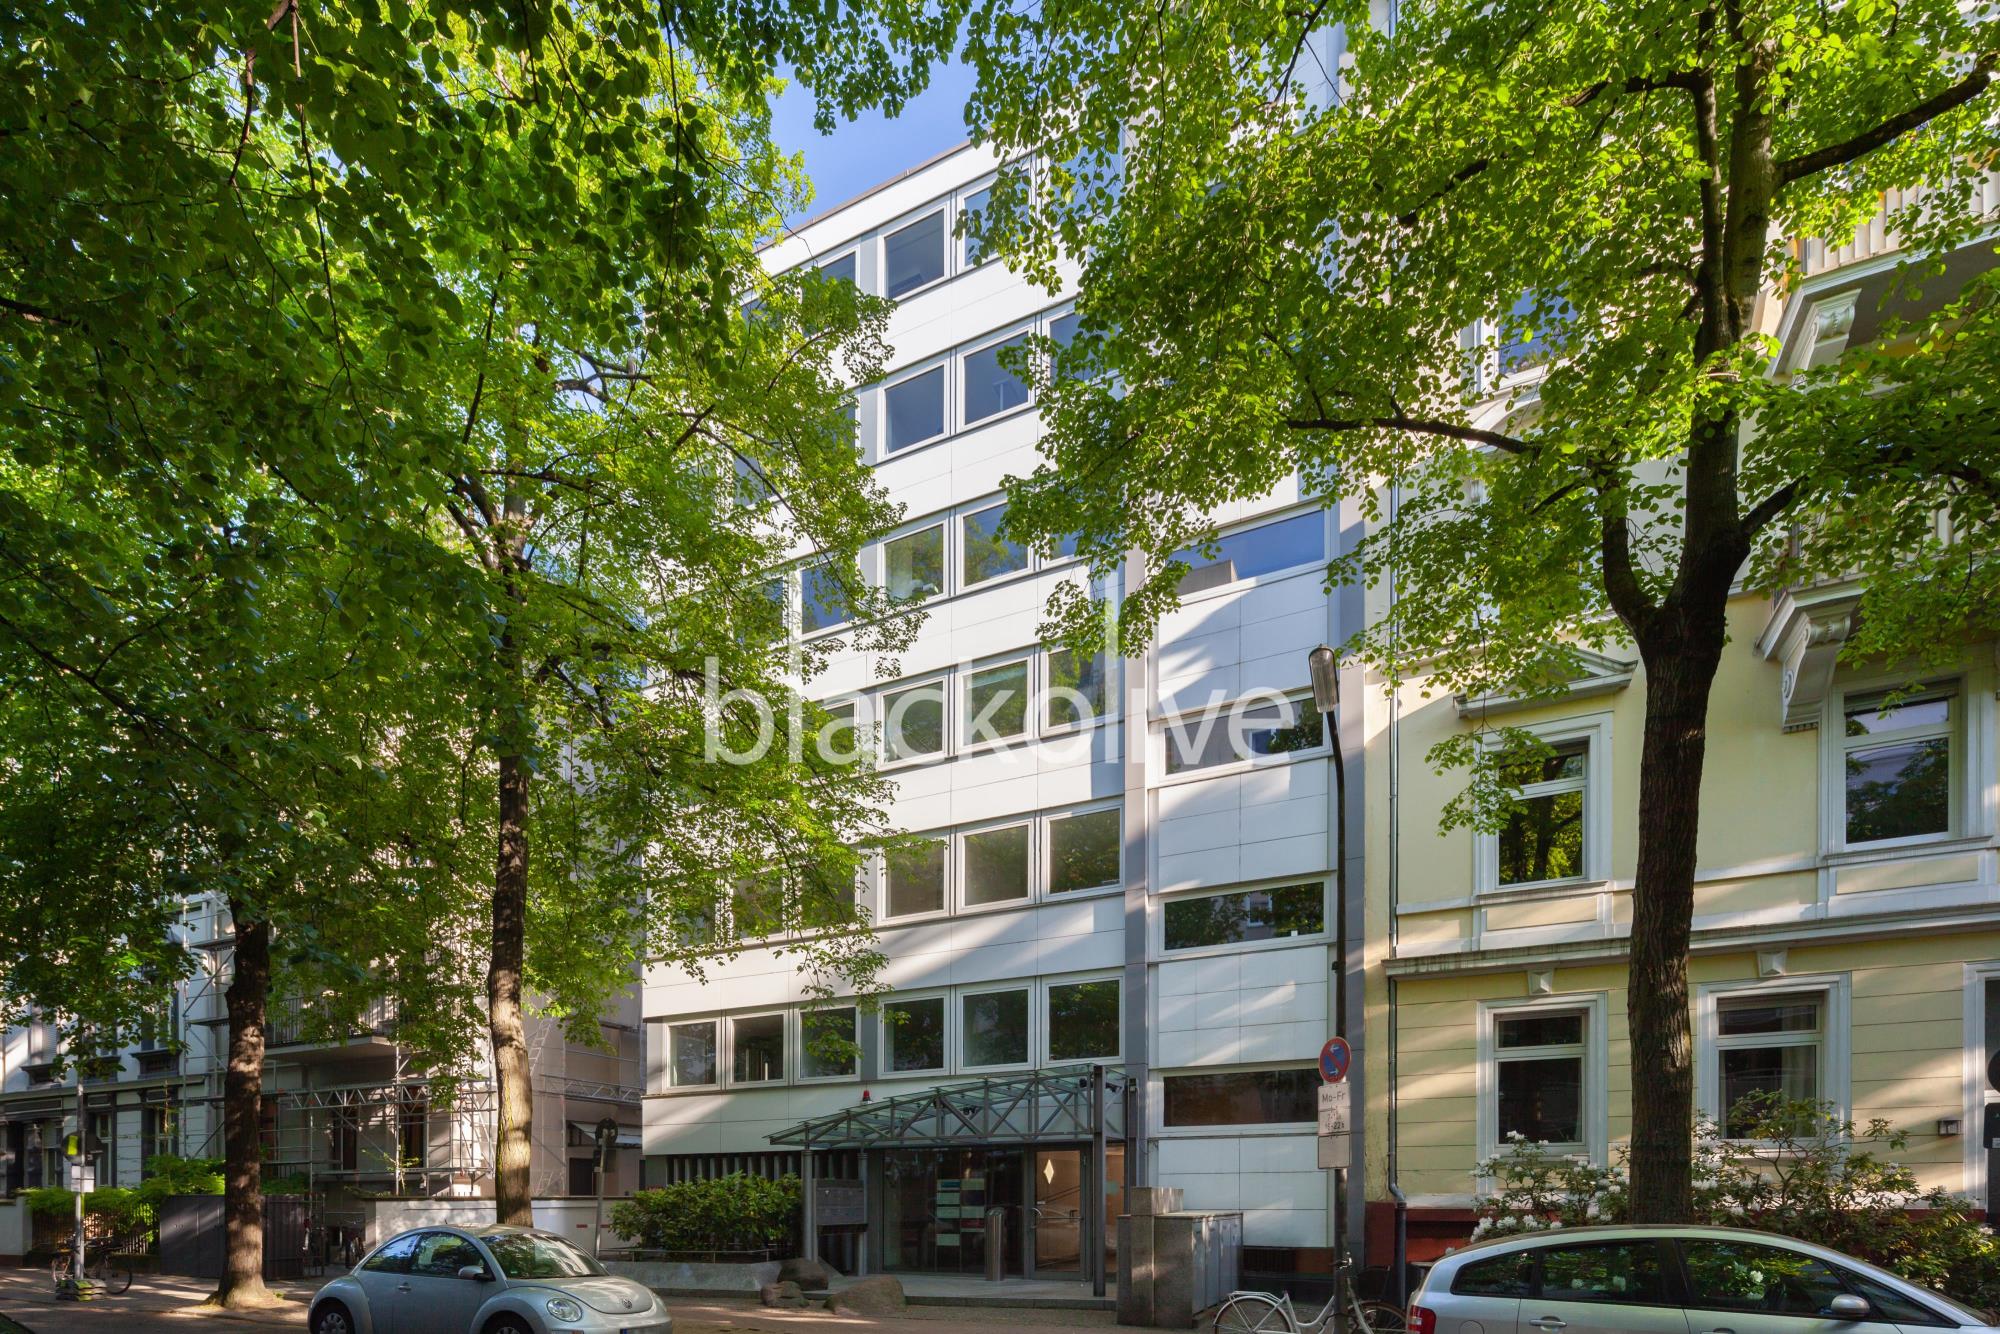 Westend | 150 m² - 300 m² | ab EUR 22,50 